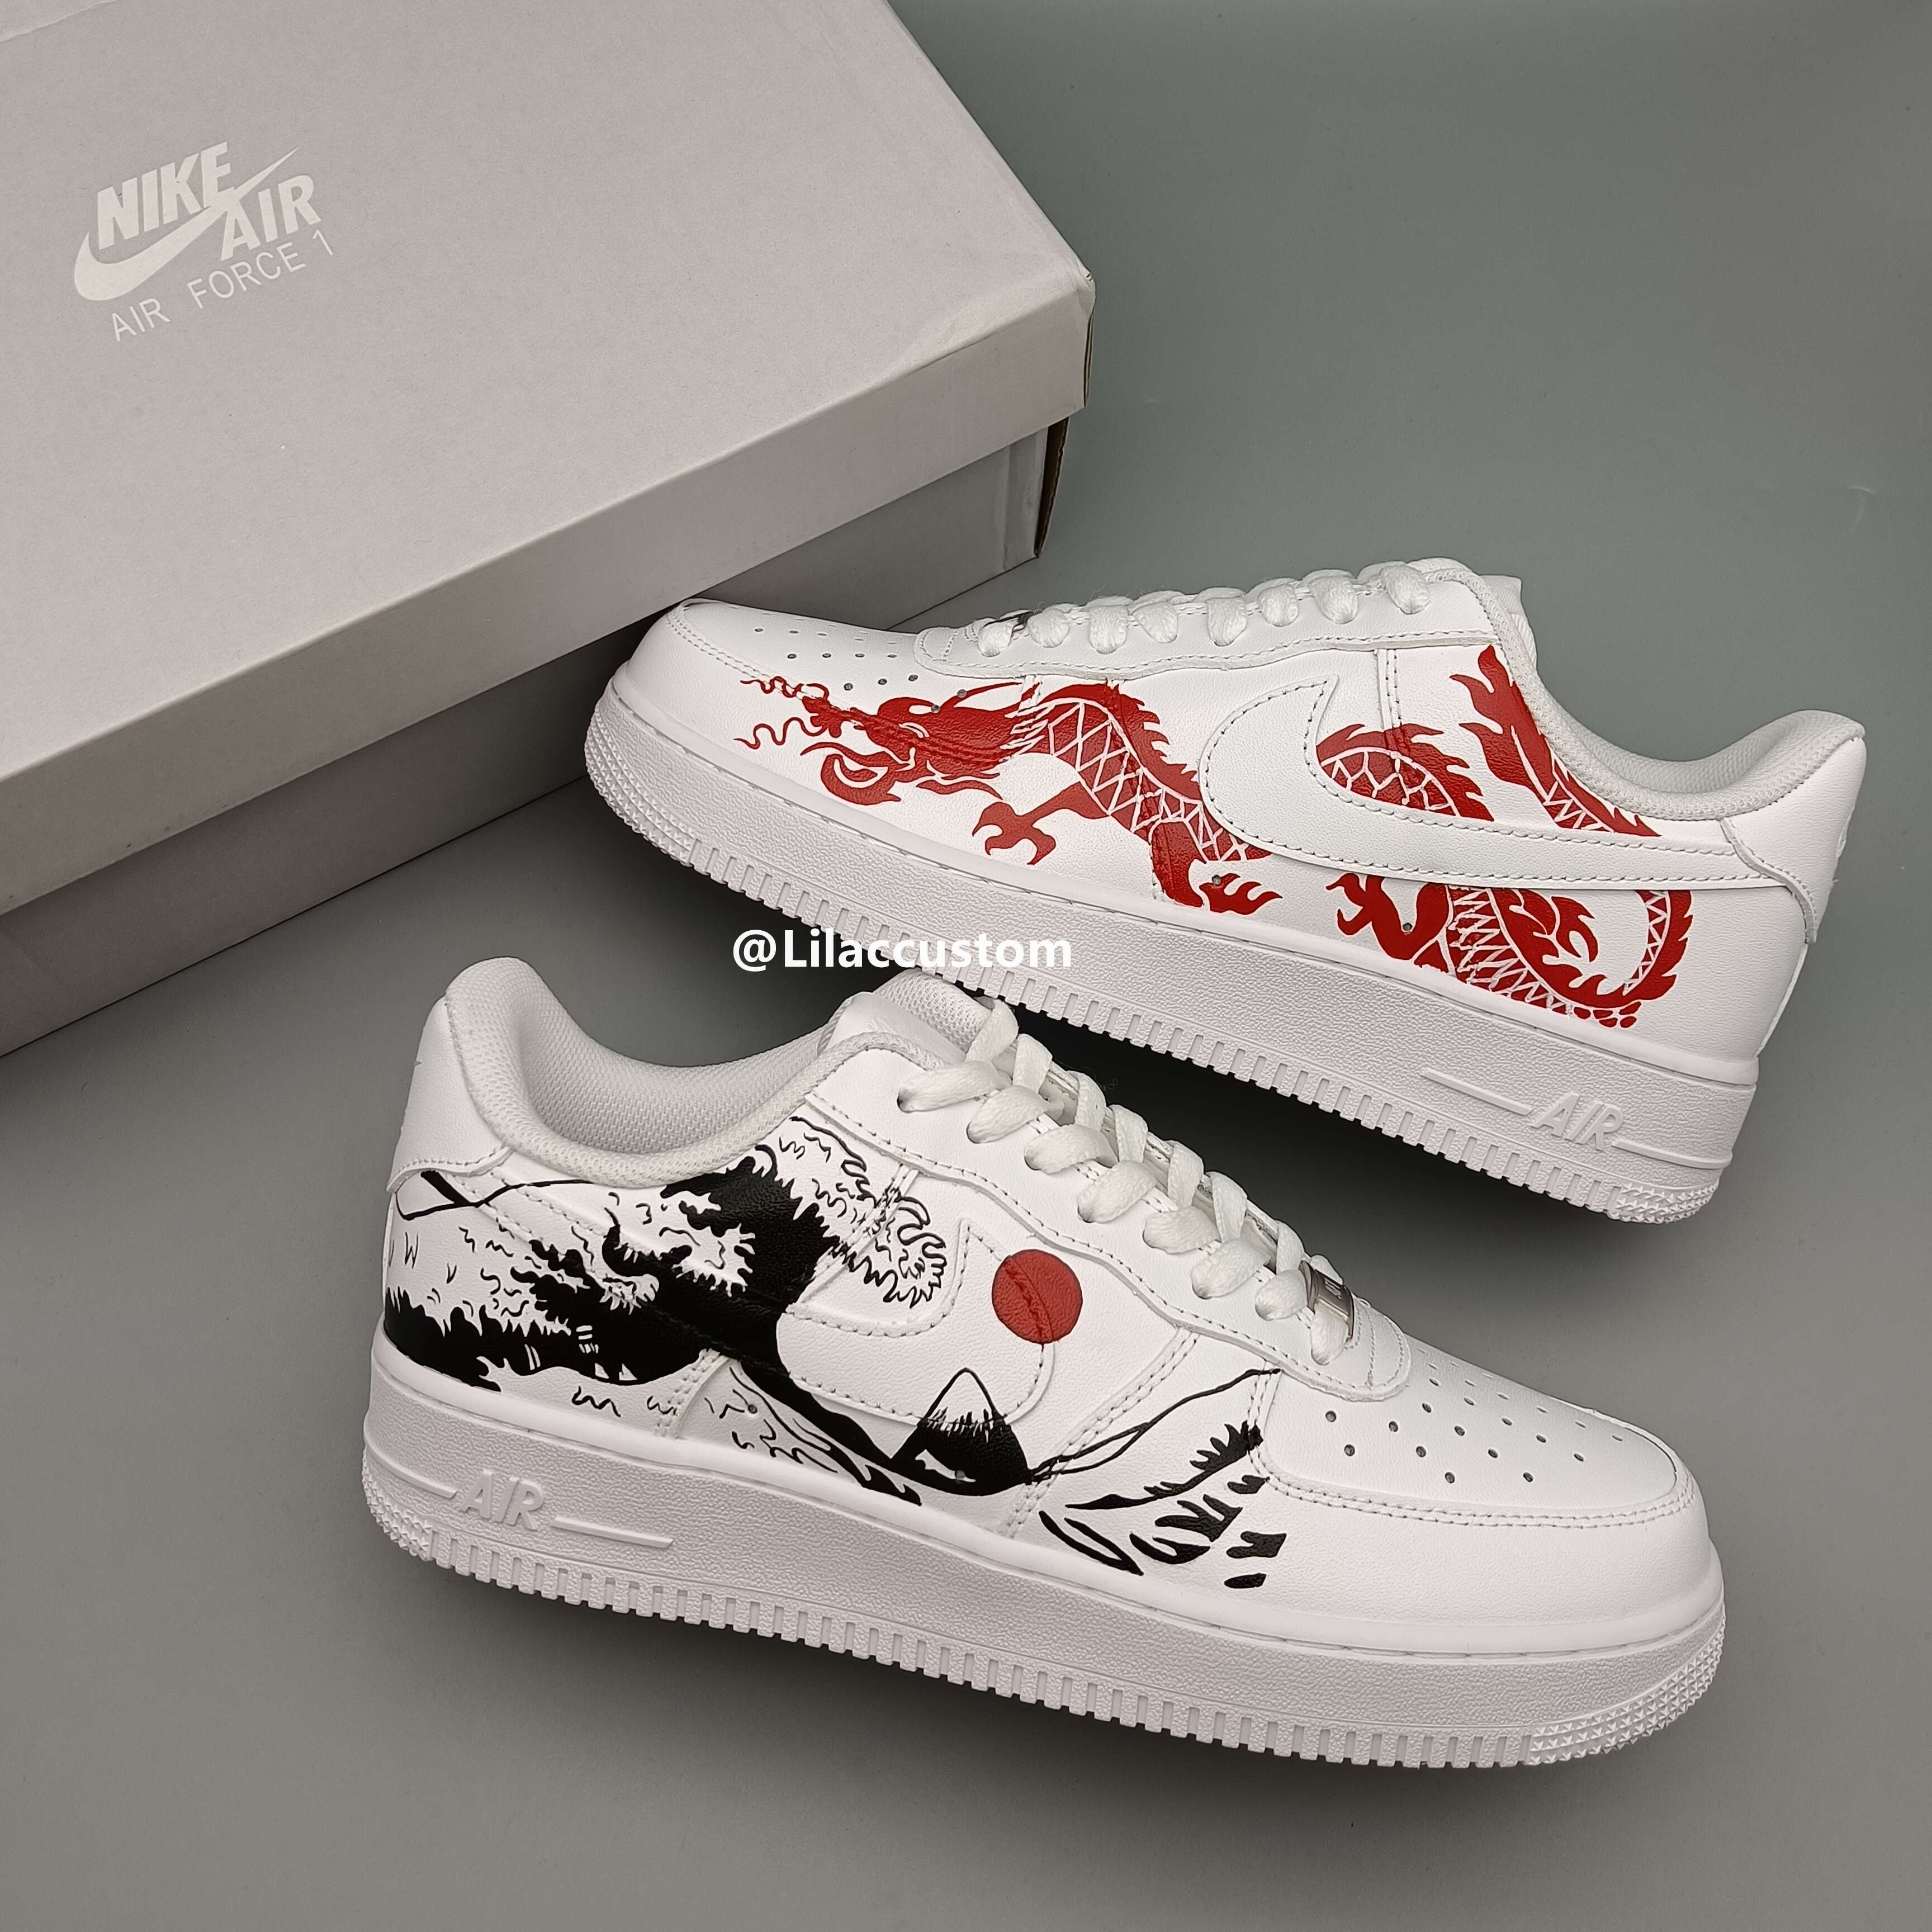 Nike Air Force 1 Waves And Dragons Custom